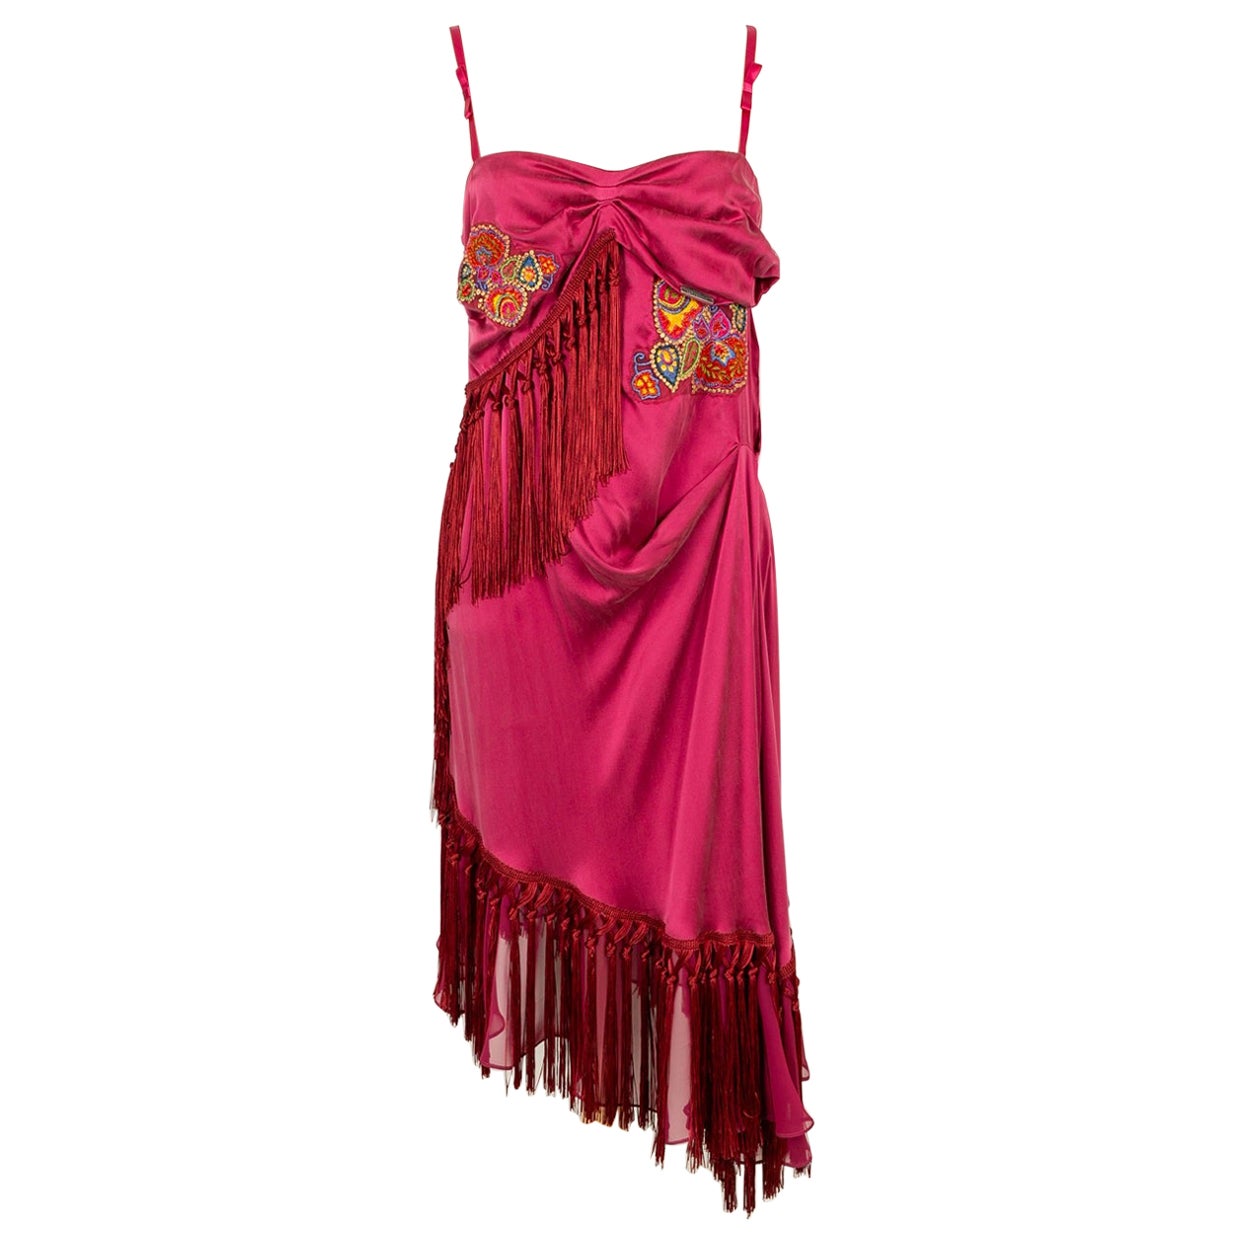 John Galliano Dress in Pink Silk, 2000s For Sale